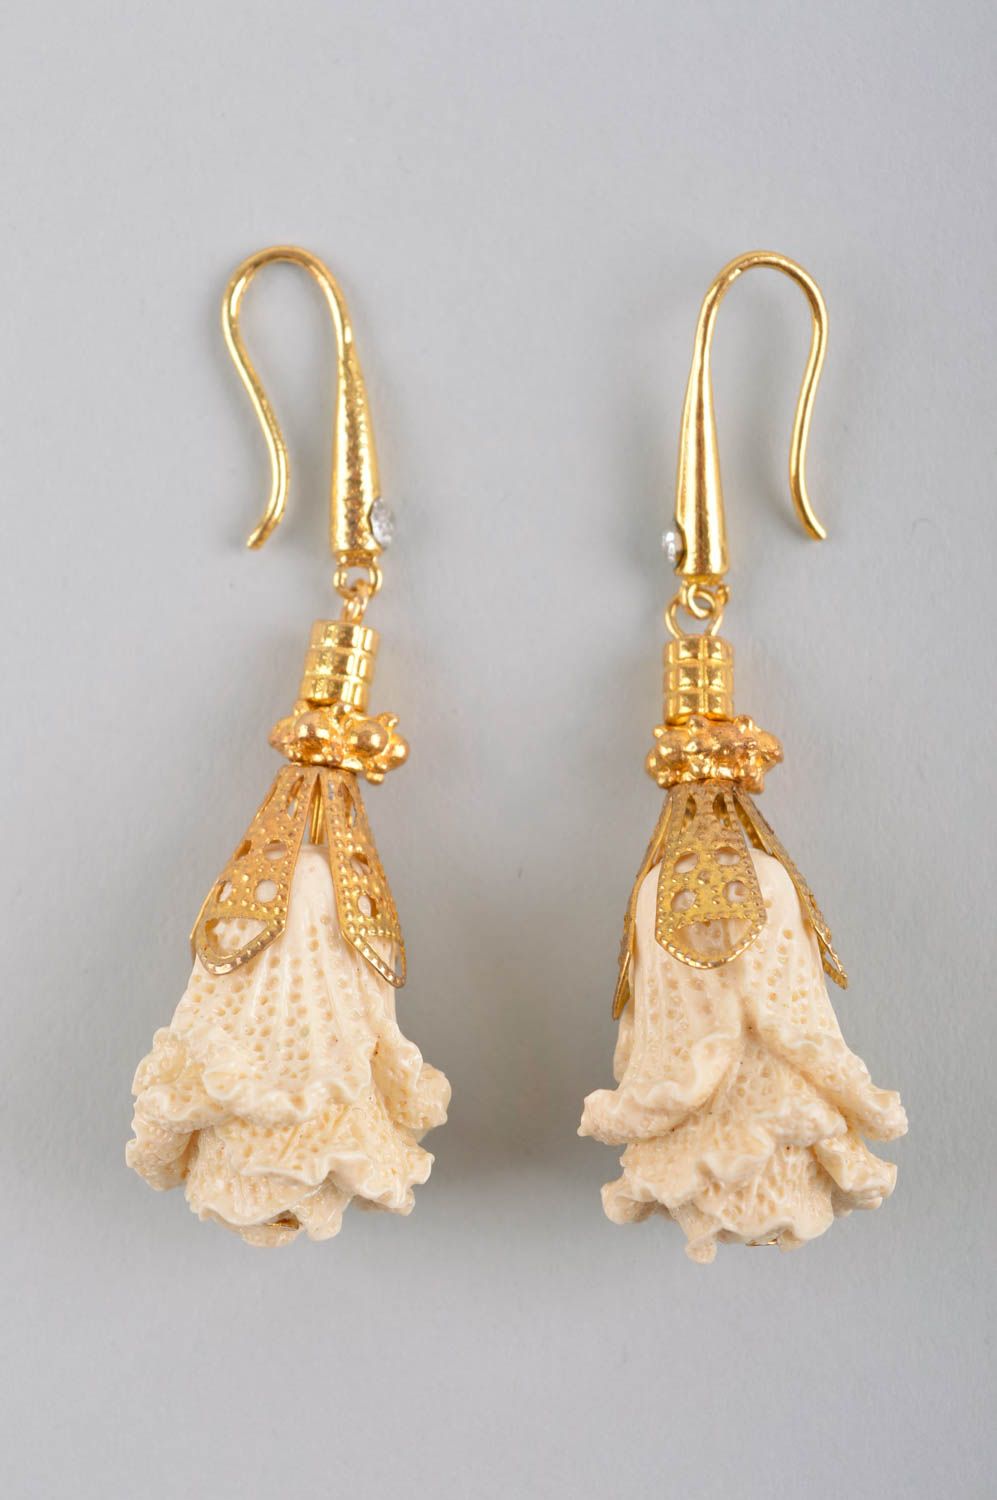 Handmade earrings gemstone jewelry designer accessories womens earrings photo 3